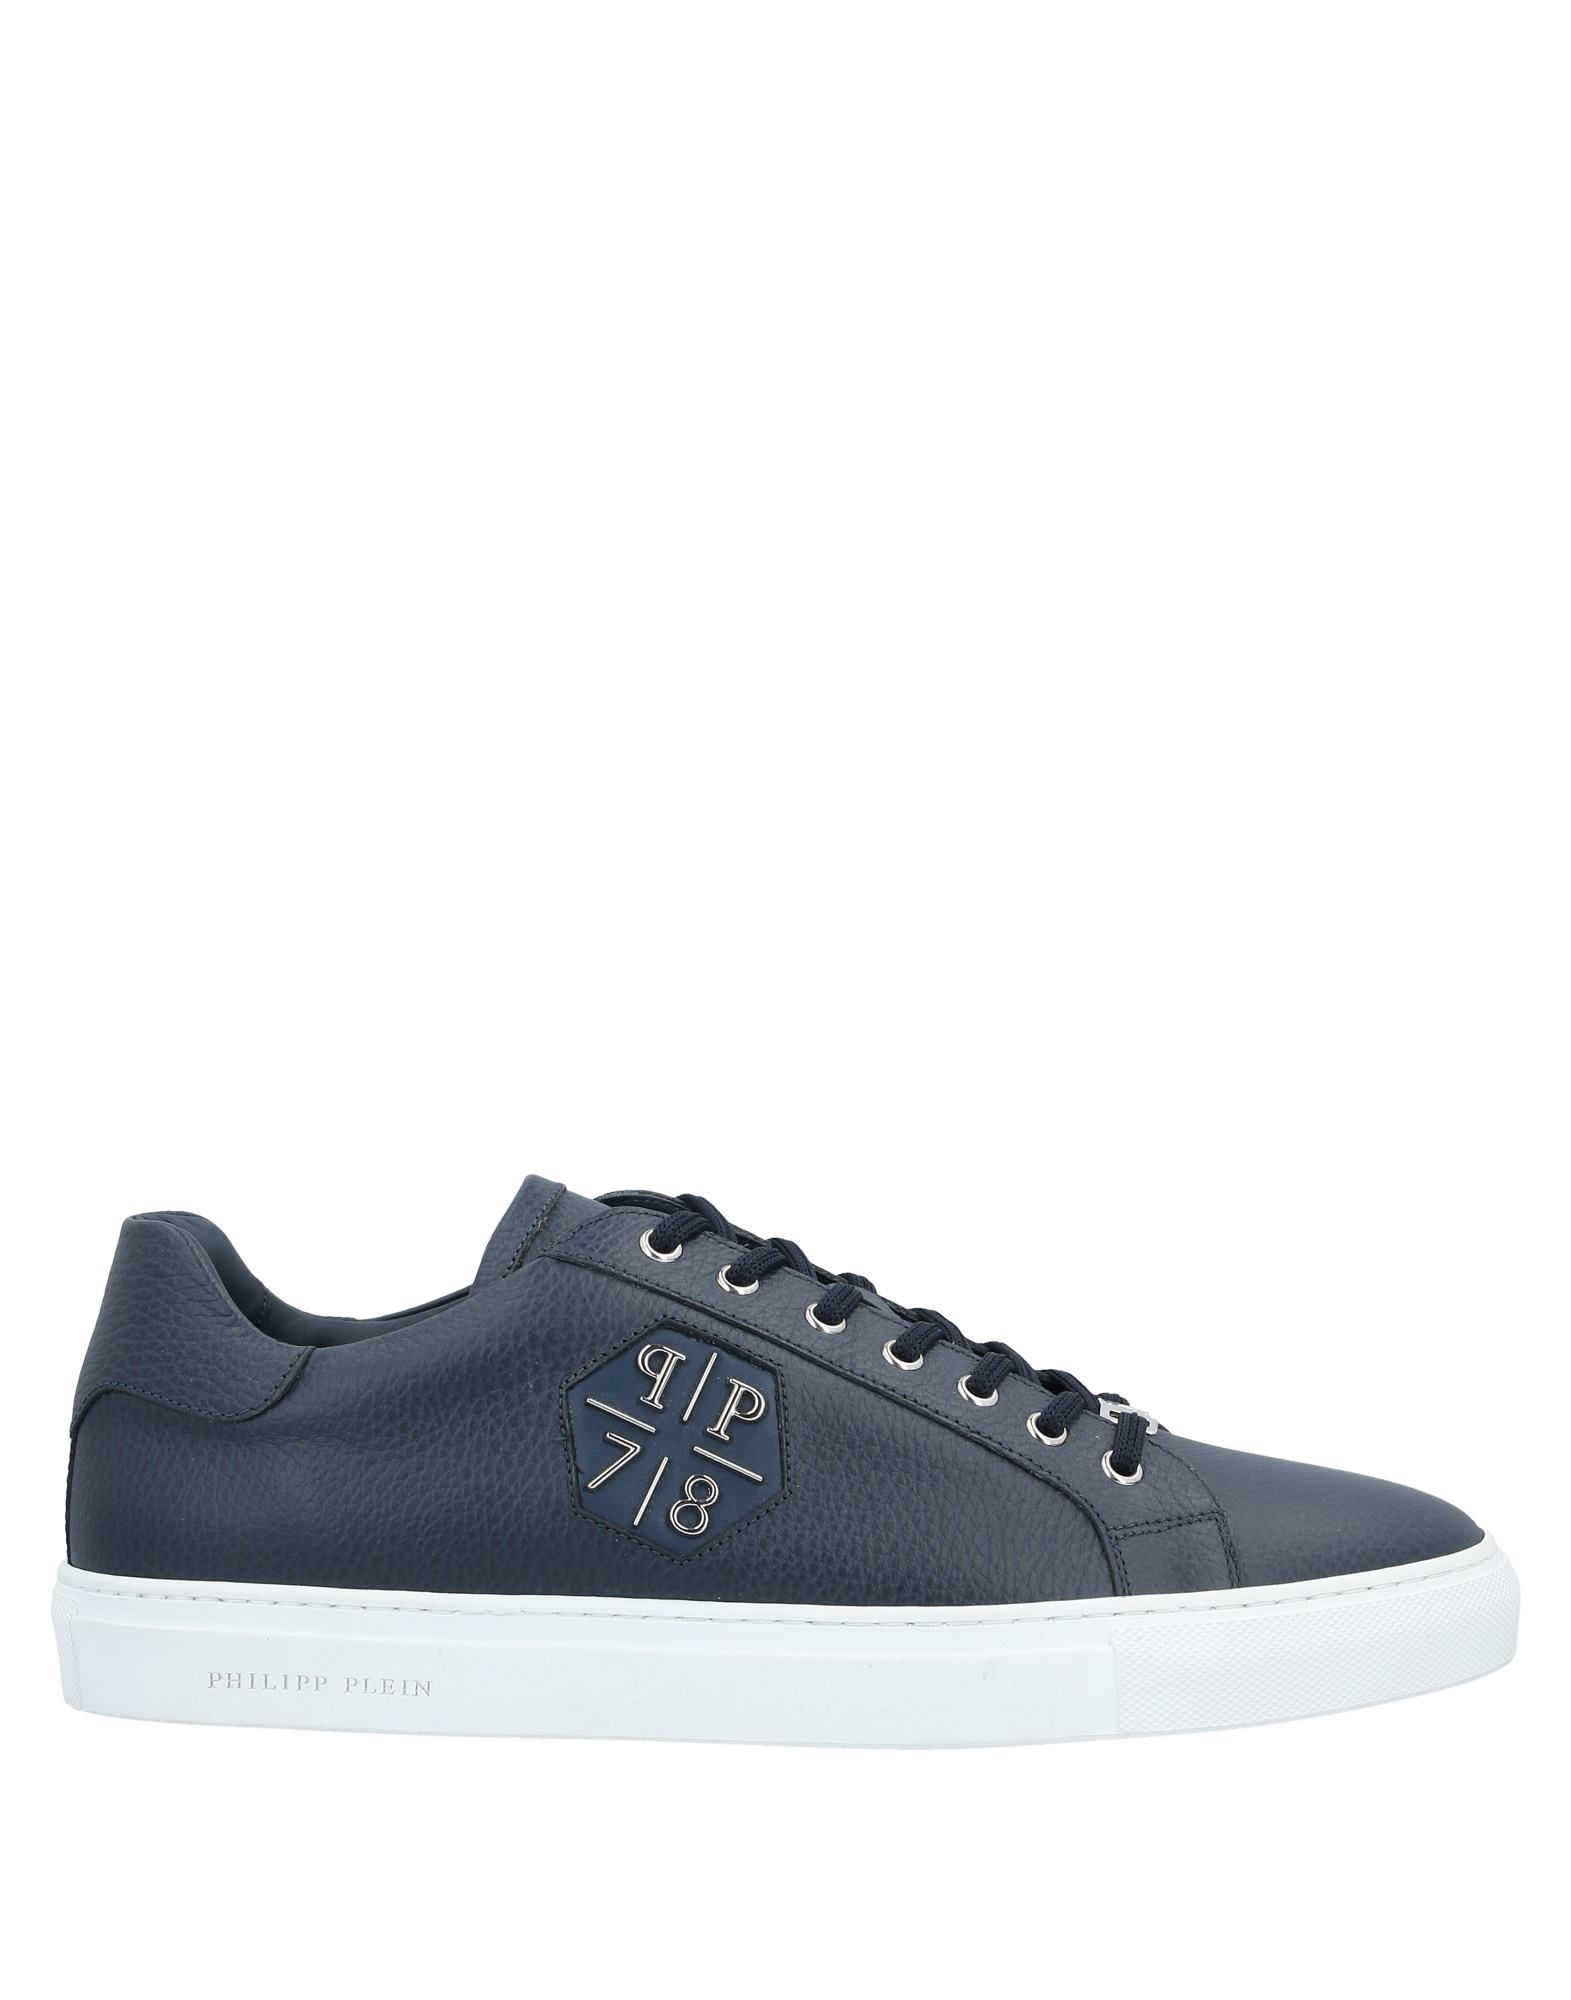 PHILIPP PLEIN Low-tops & sneakers - Item 11954164